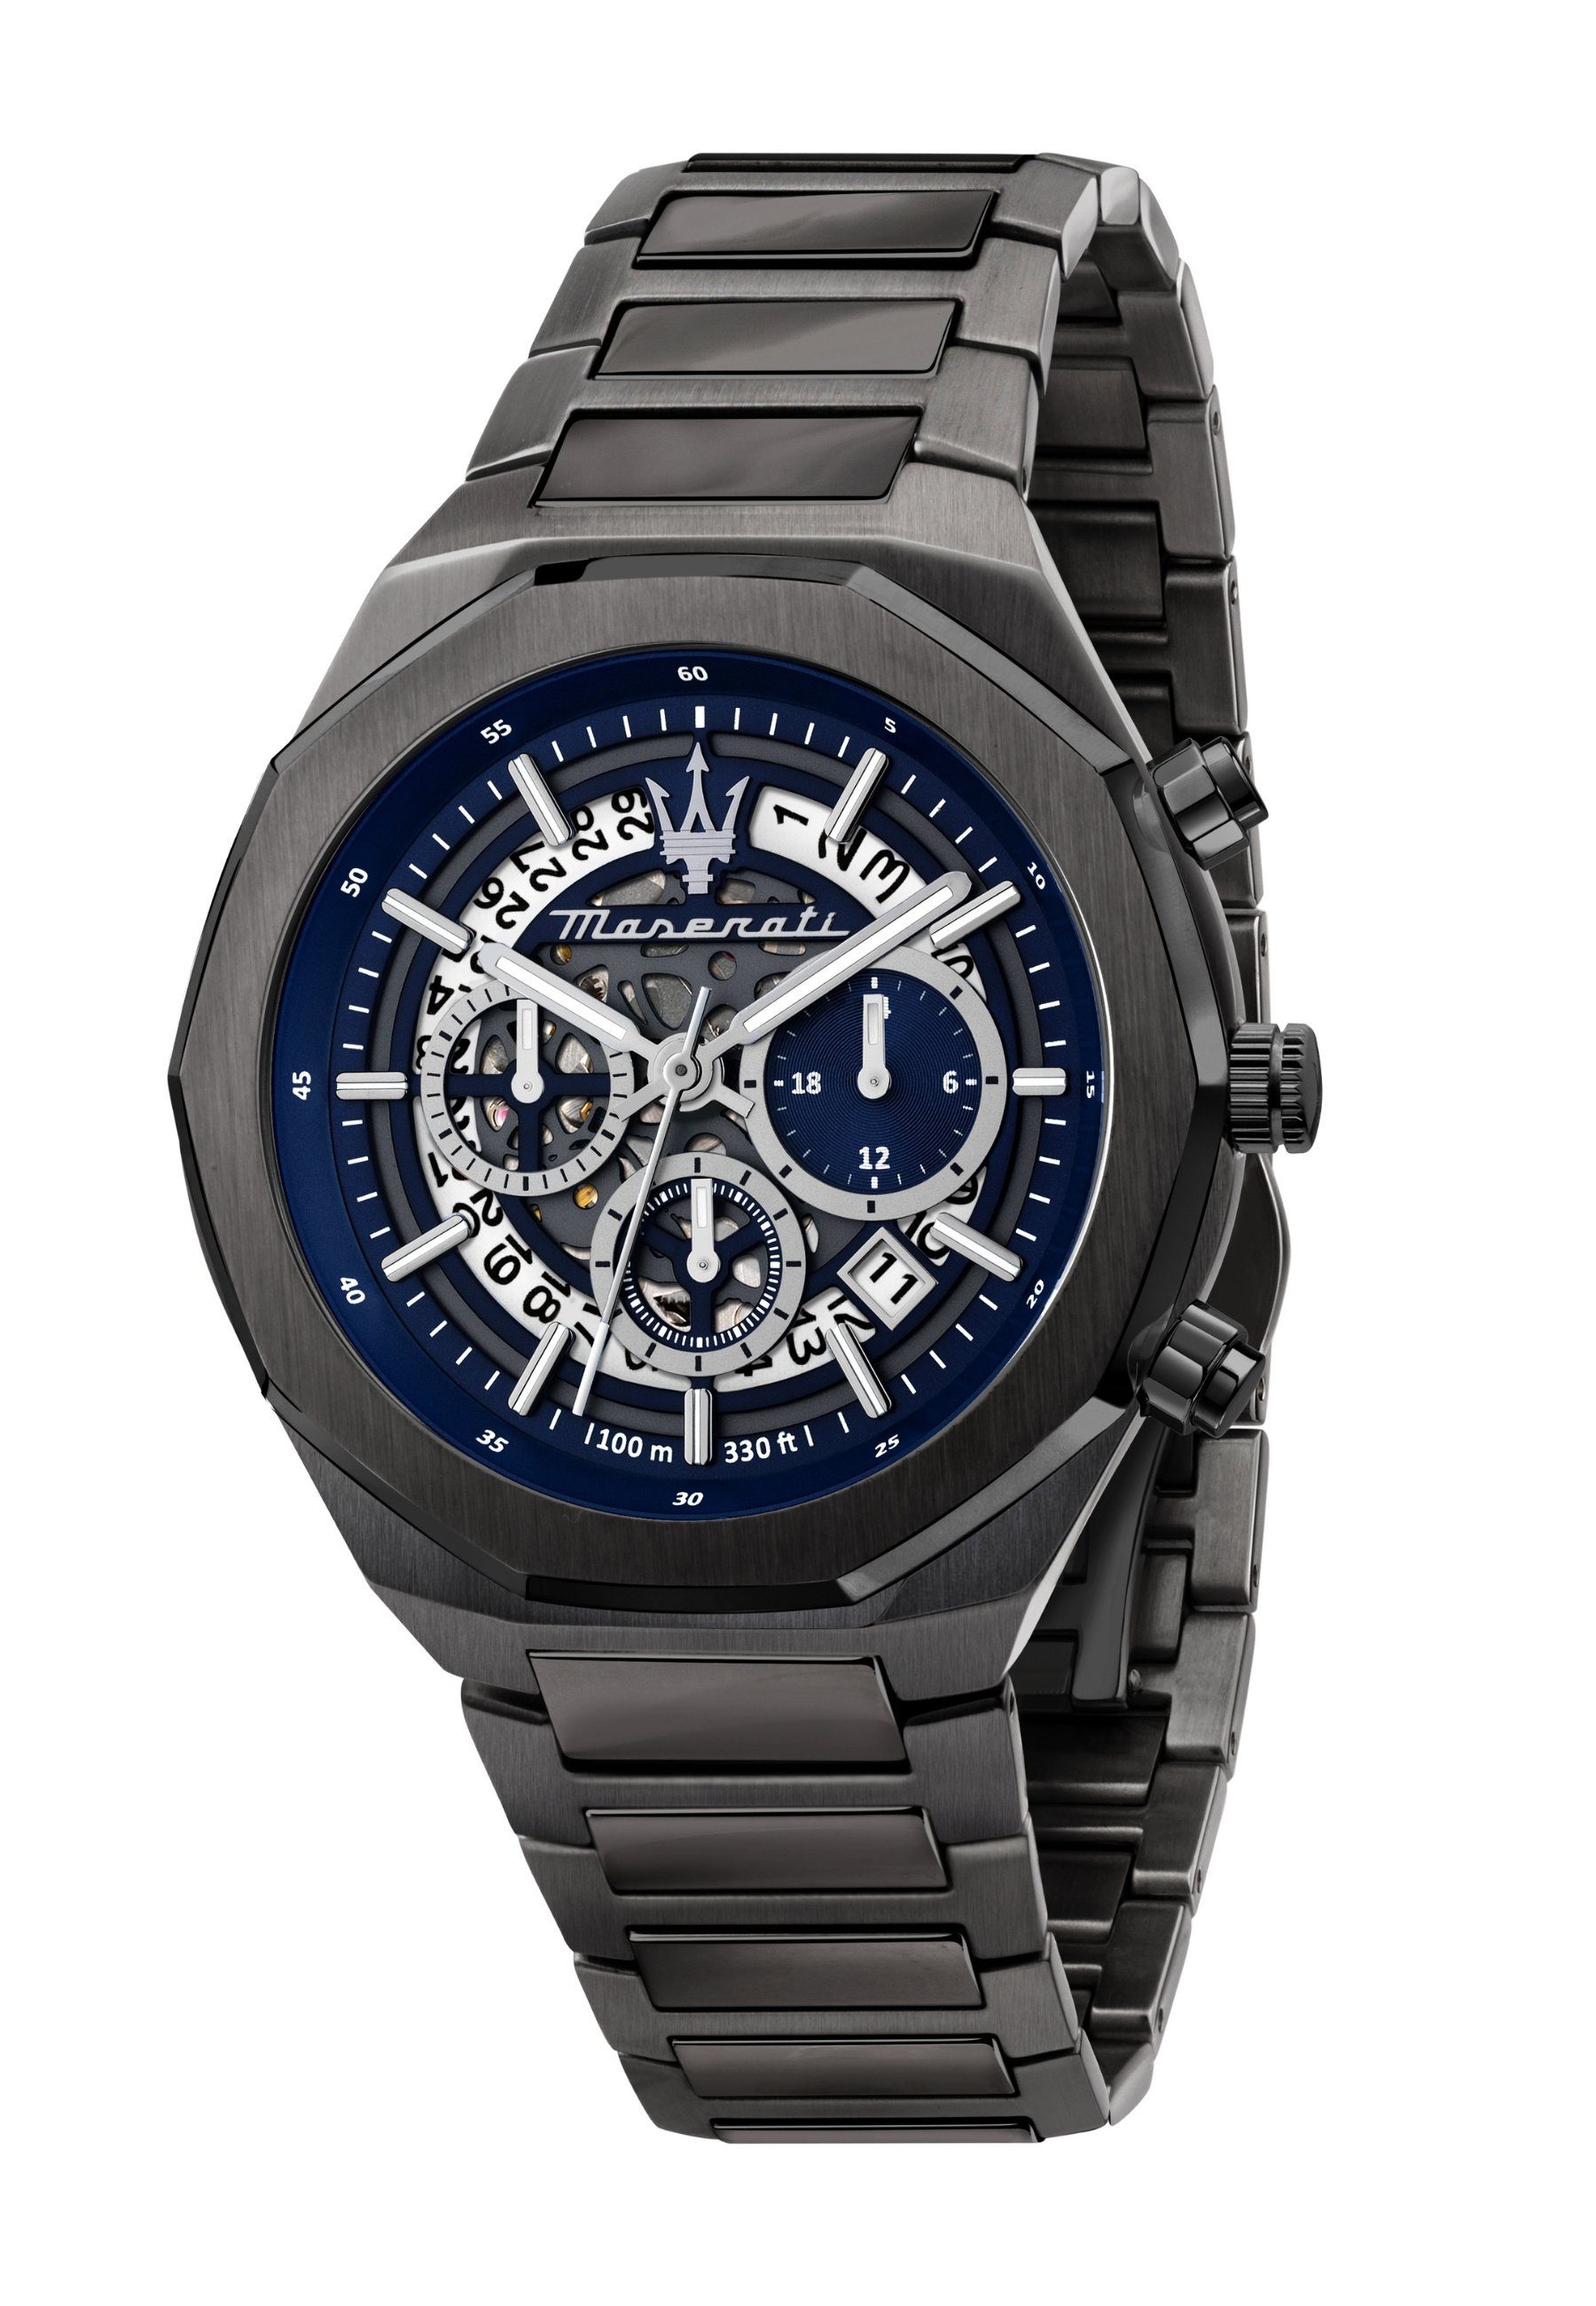 hochwertige Stile, modernem besonders aus Chronograph Armband angenehm Maserati ist Edelstahl mit Das Design, Time